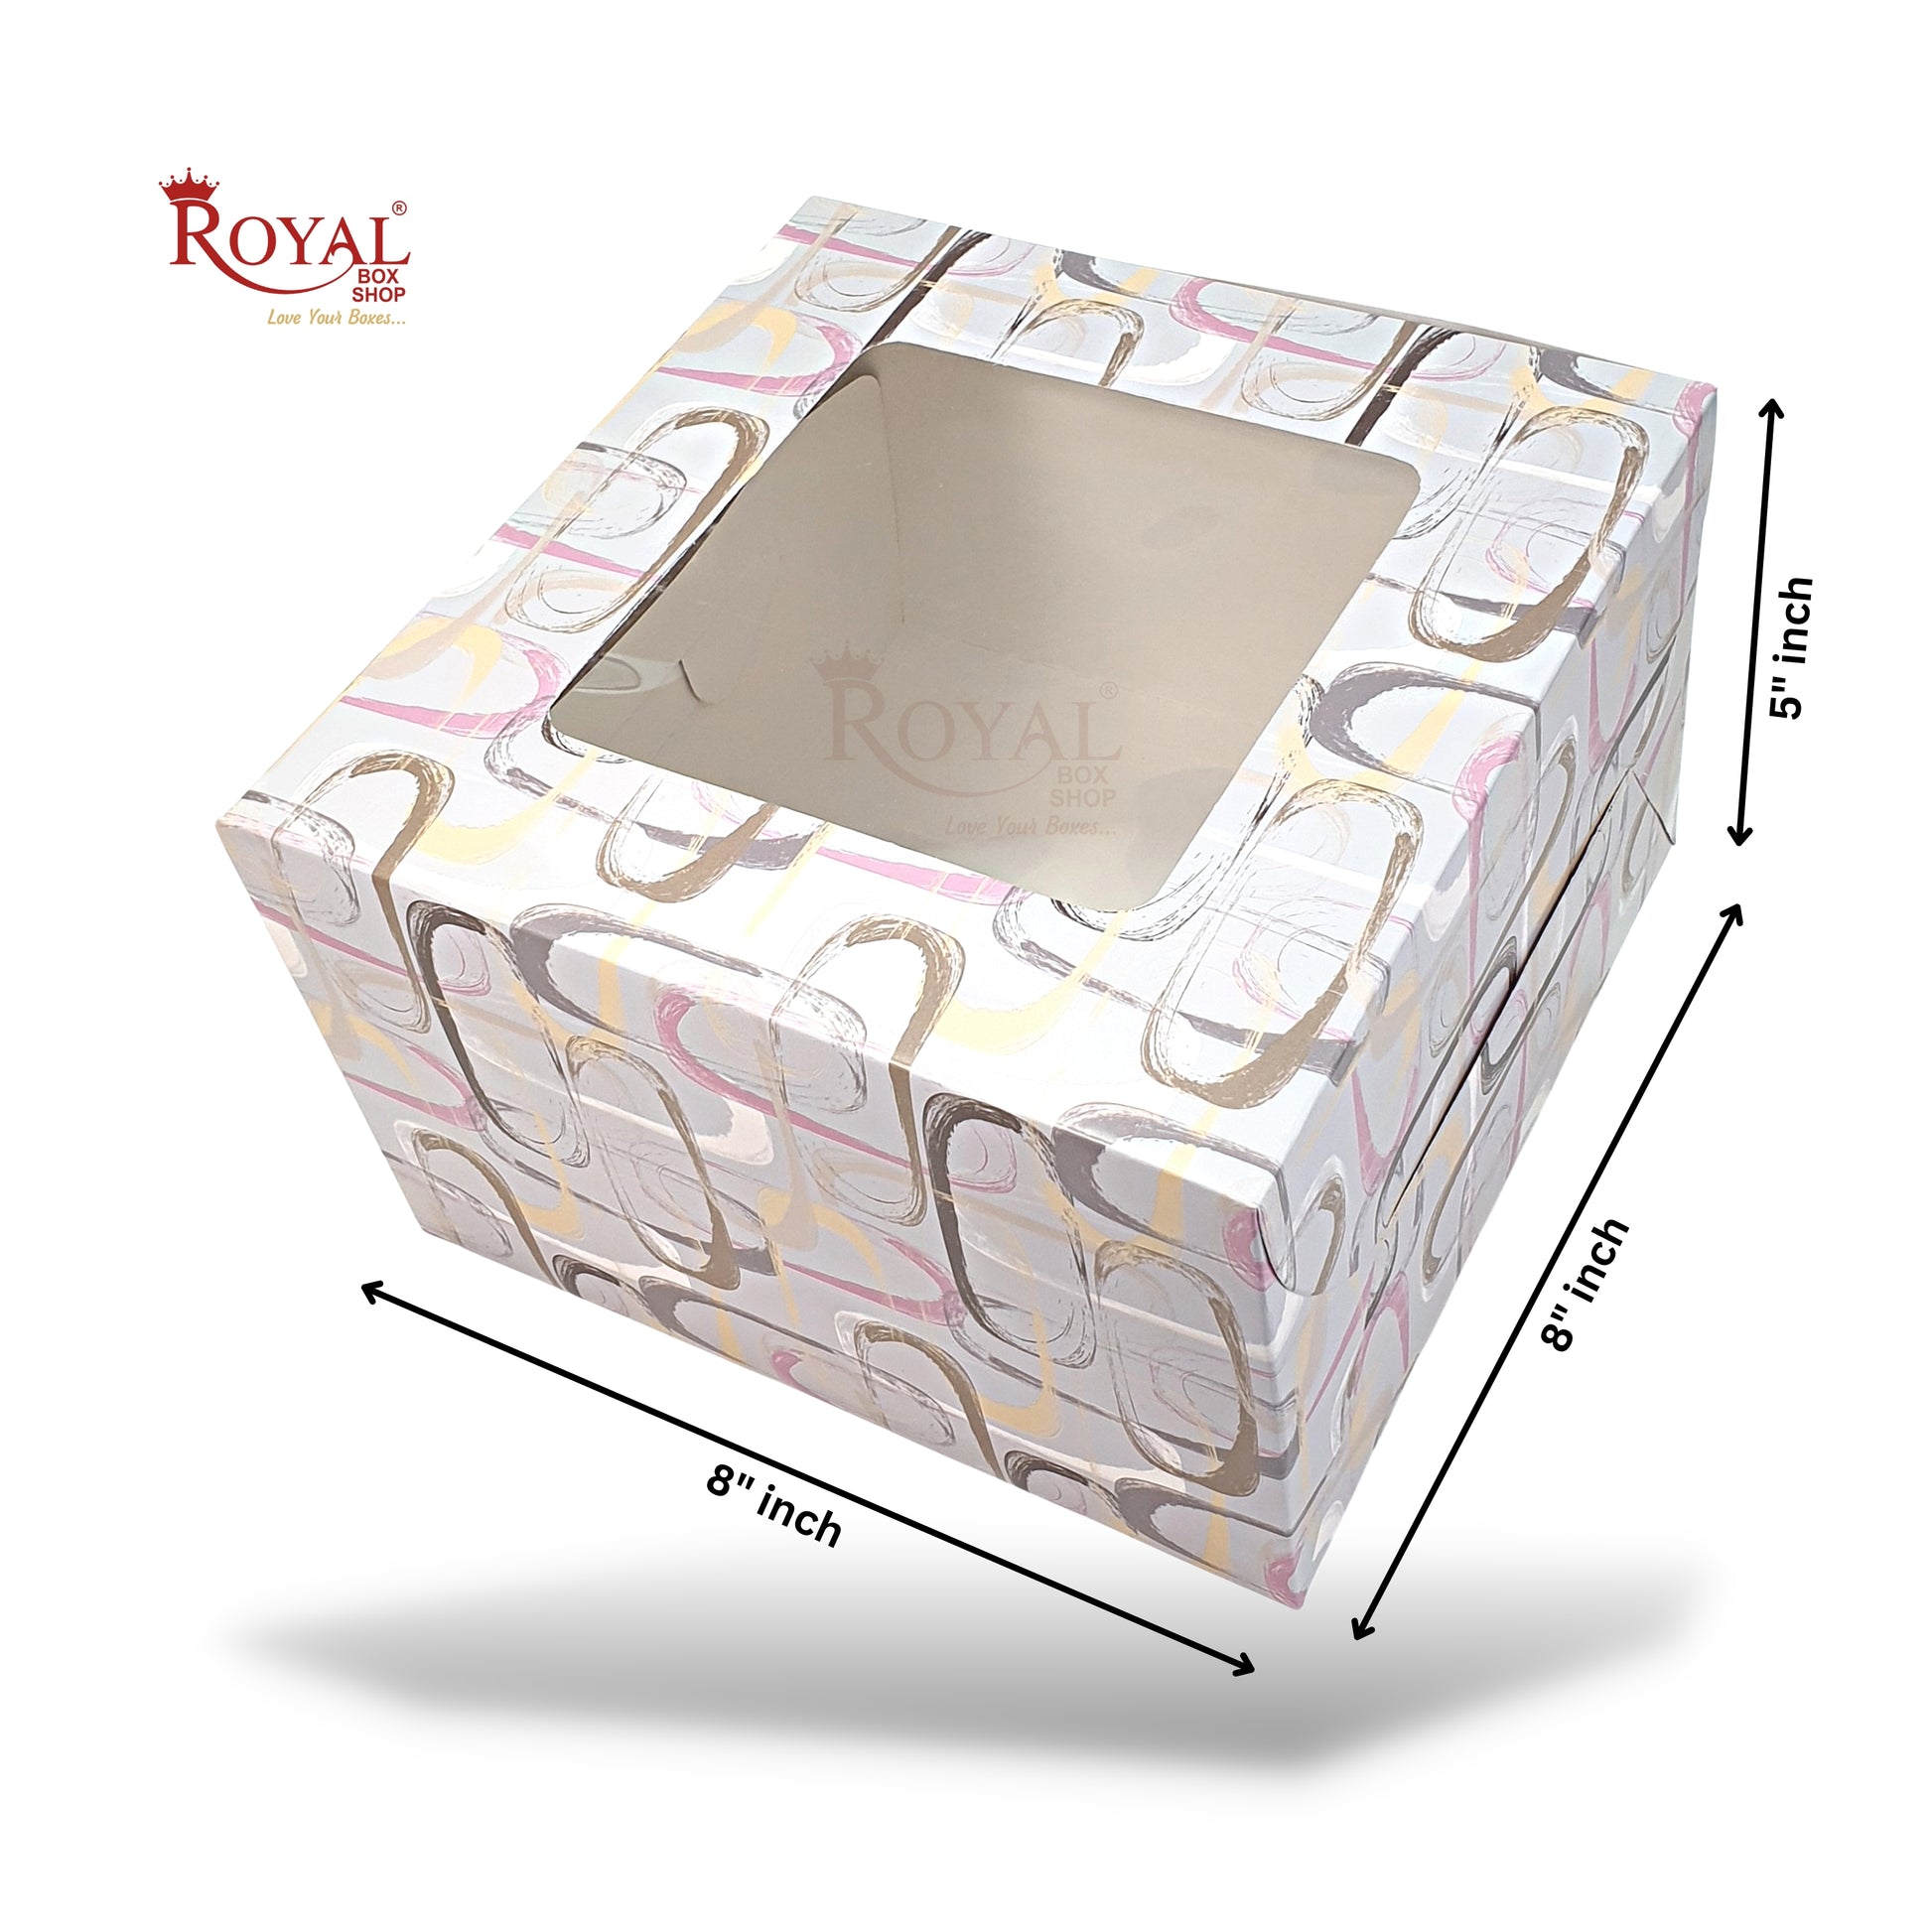 Half Kg Window Cake Box 8x8x5 Royal Box Shop 8510020531 www.royalboxshop.com